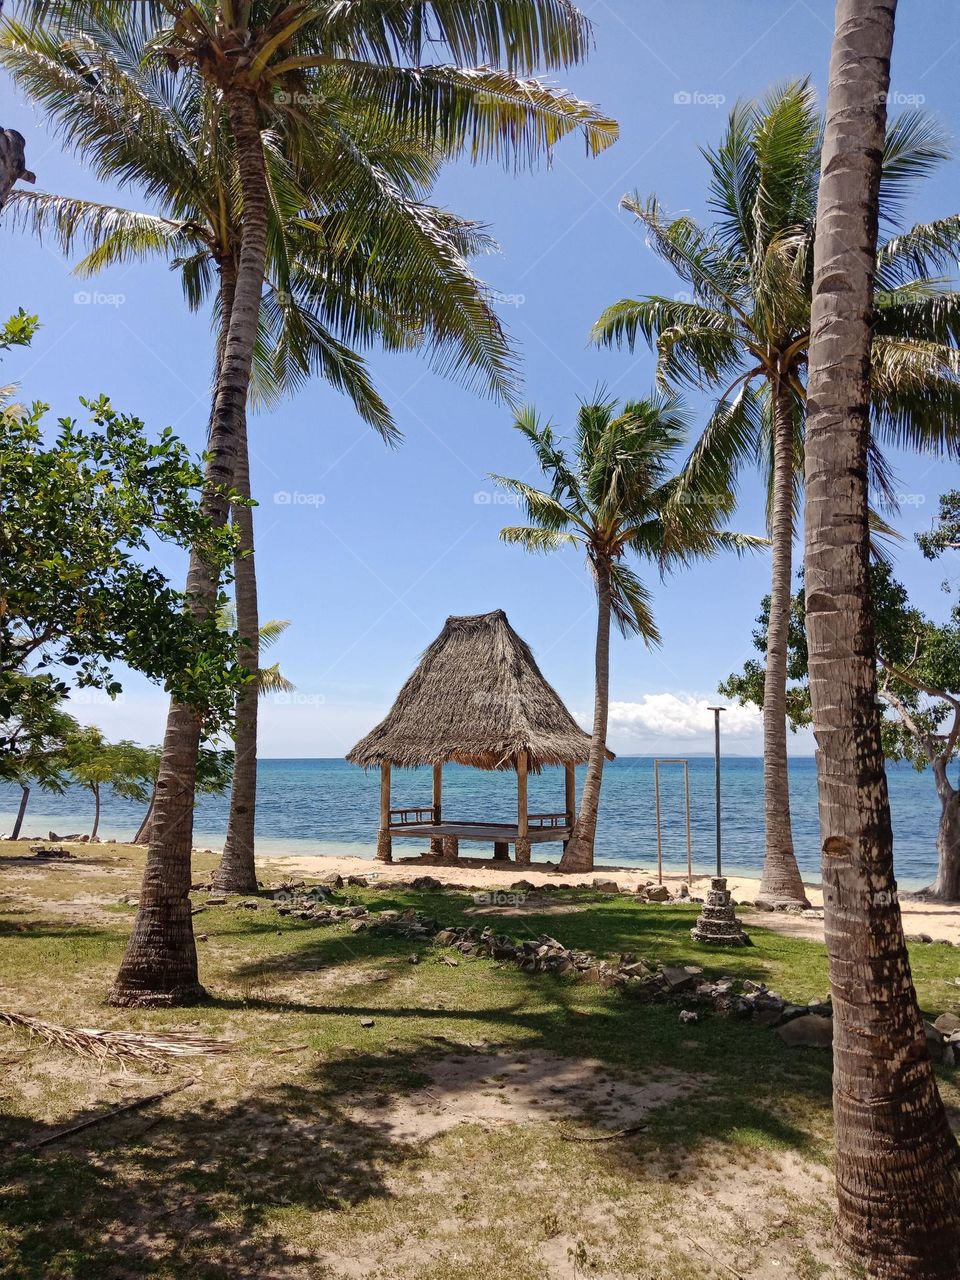 Hut by the beach on a sunny day. Com,  Lautem,  Timor-Leste.